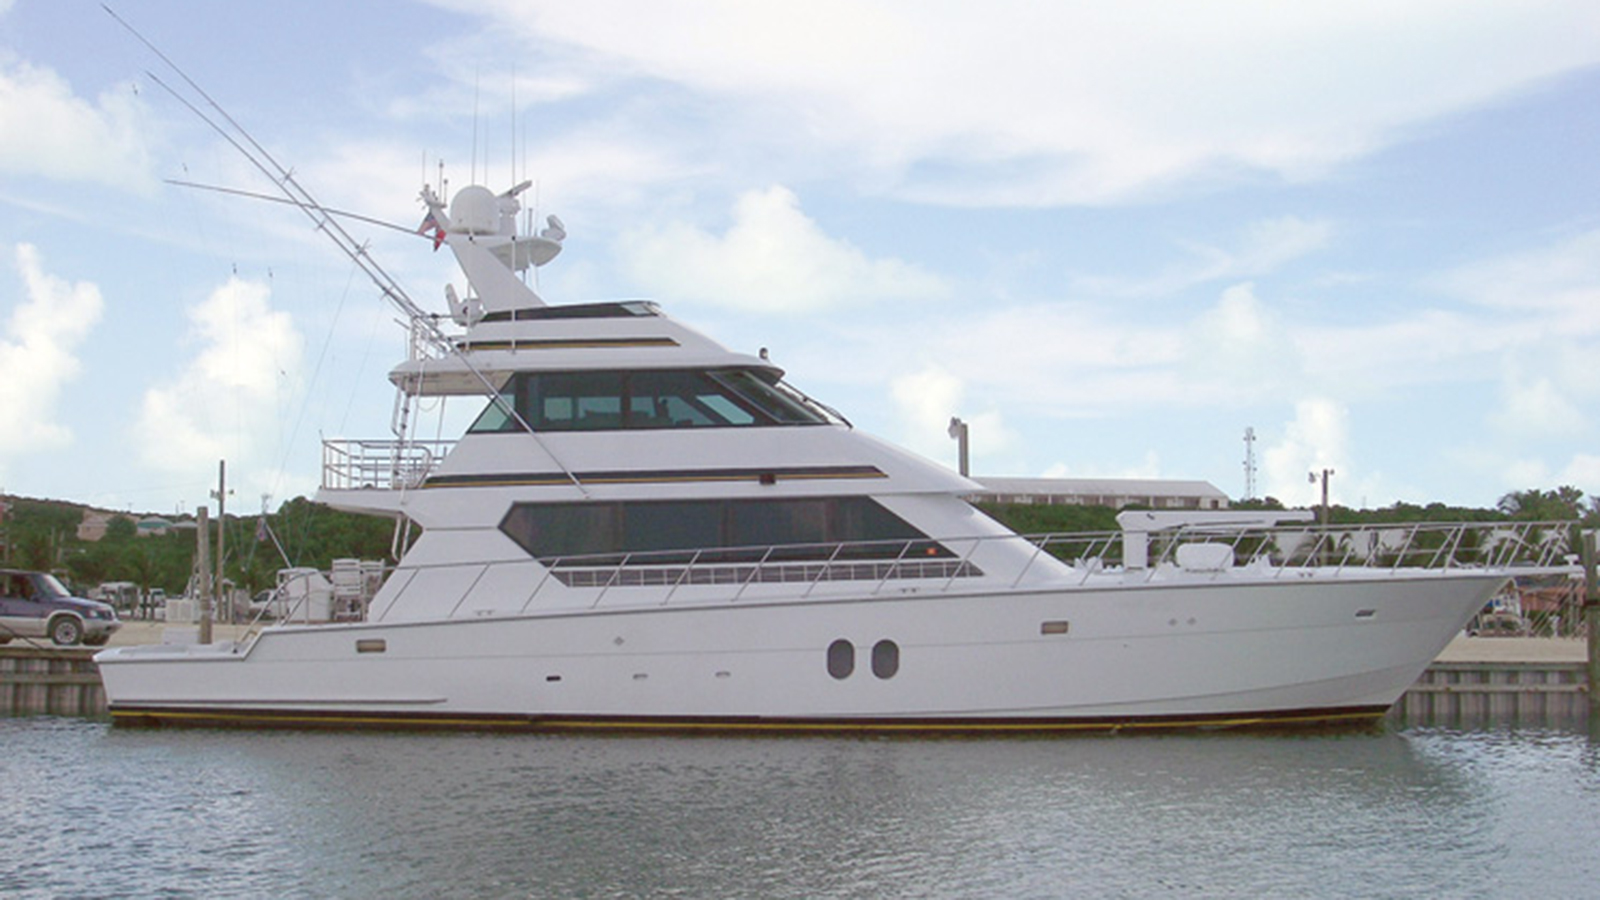 Hatteras sportfish yacht Aquaholic sold